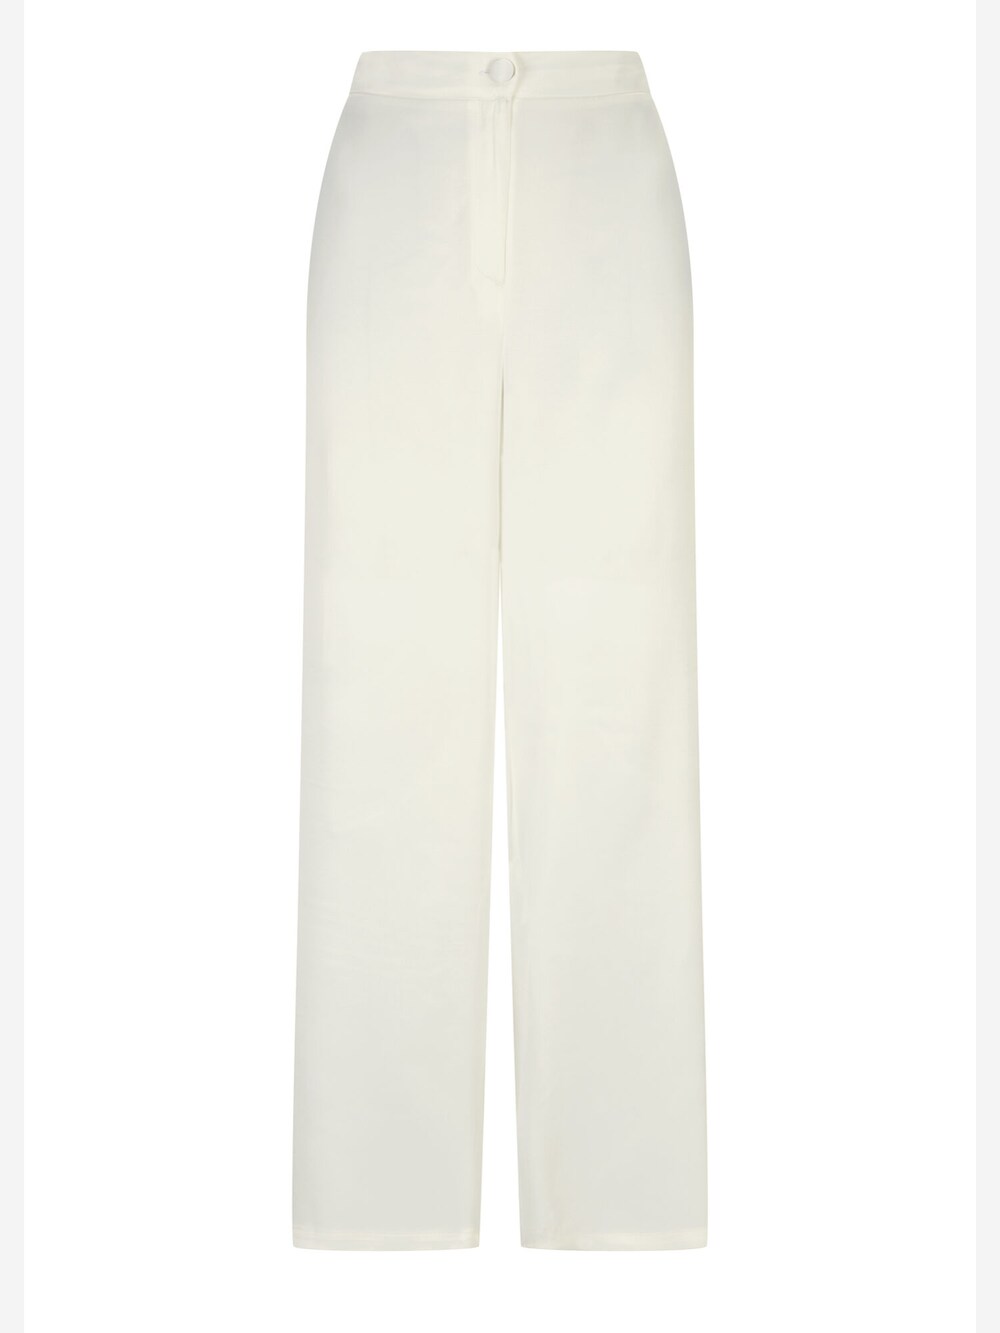 Широкие брюки Nicowa SETONO, белый широкие брюки nicowa setono белый